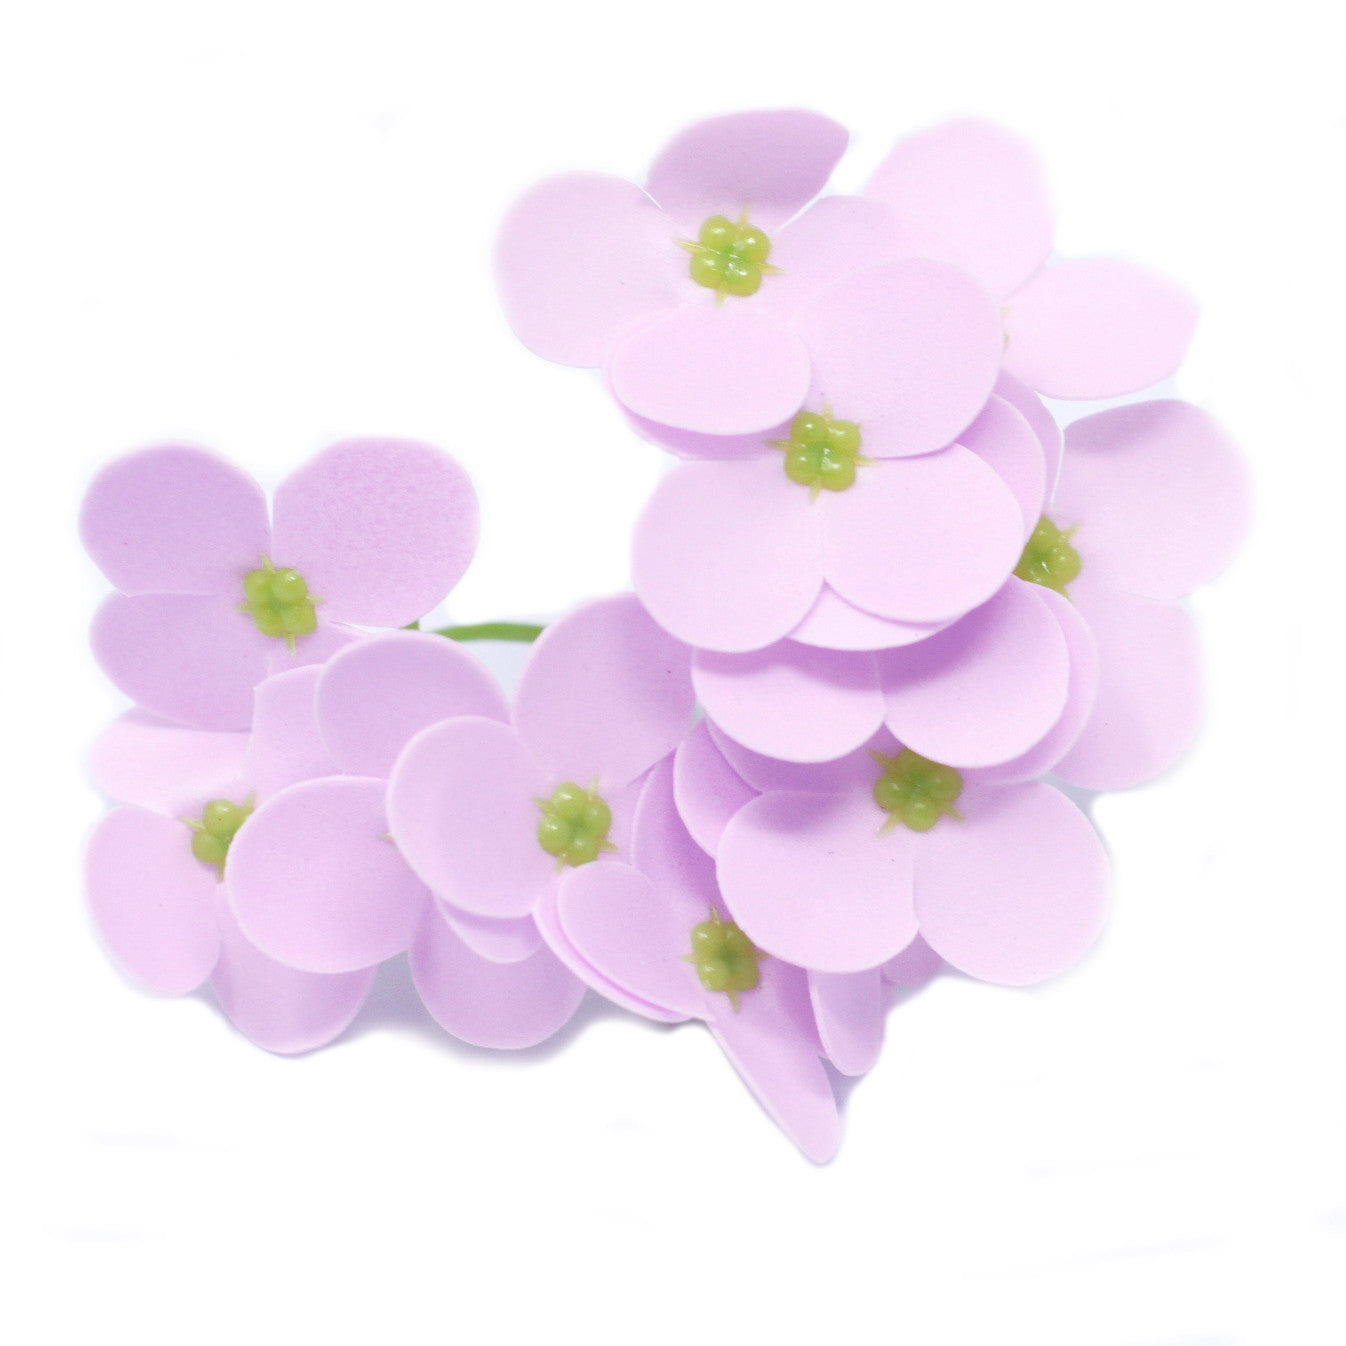 Craft Soap Flowers - Hyacinth Bean - Lavender x 10 pcs